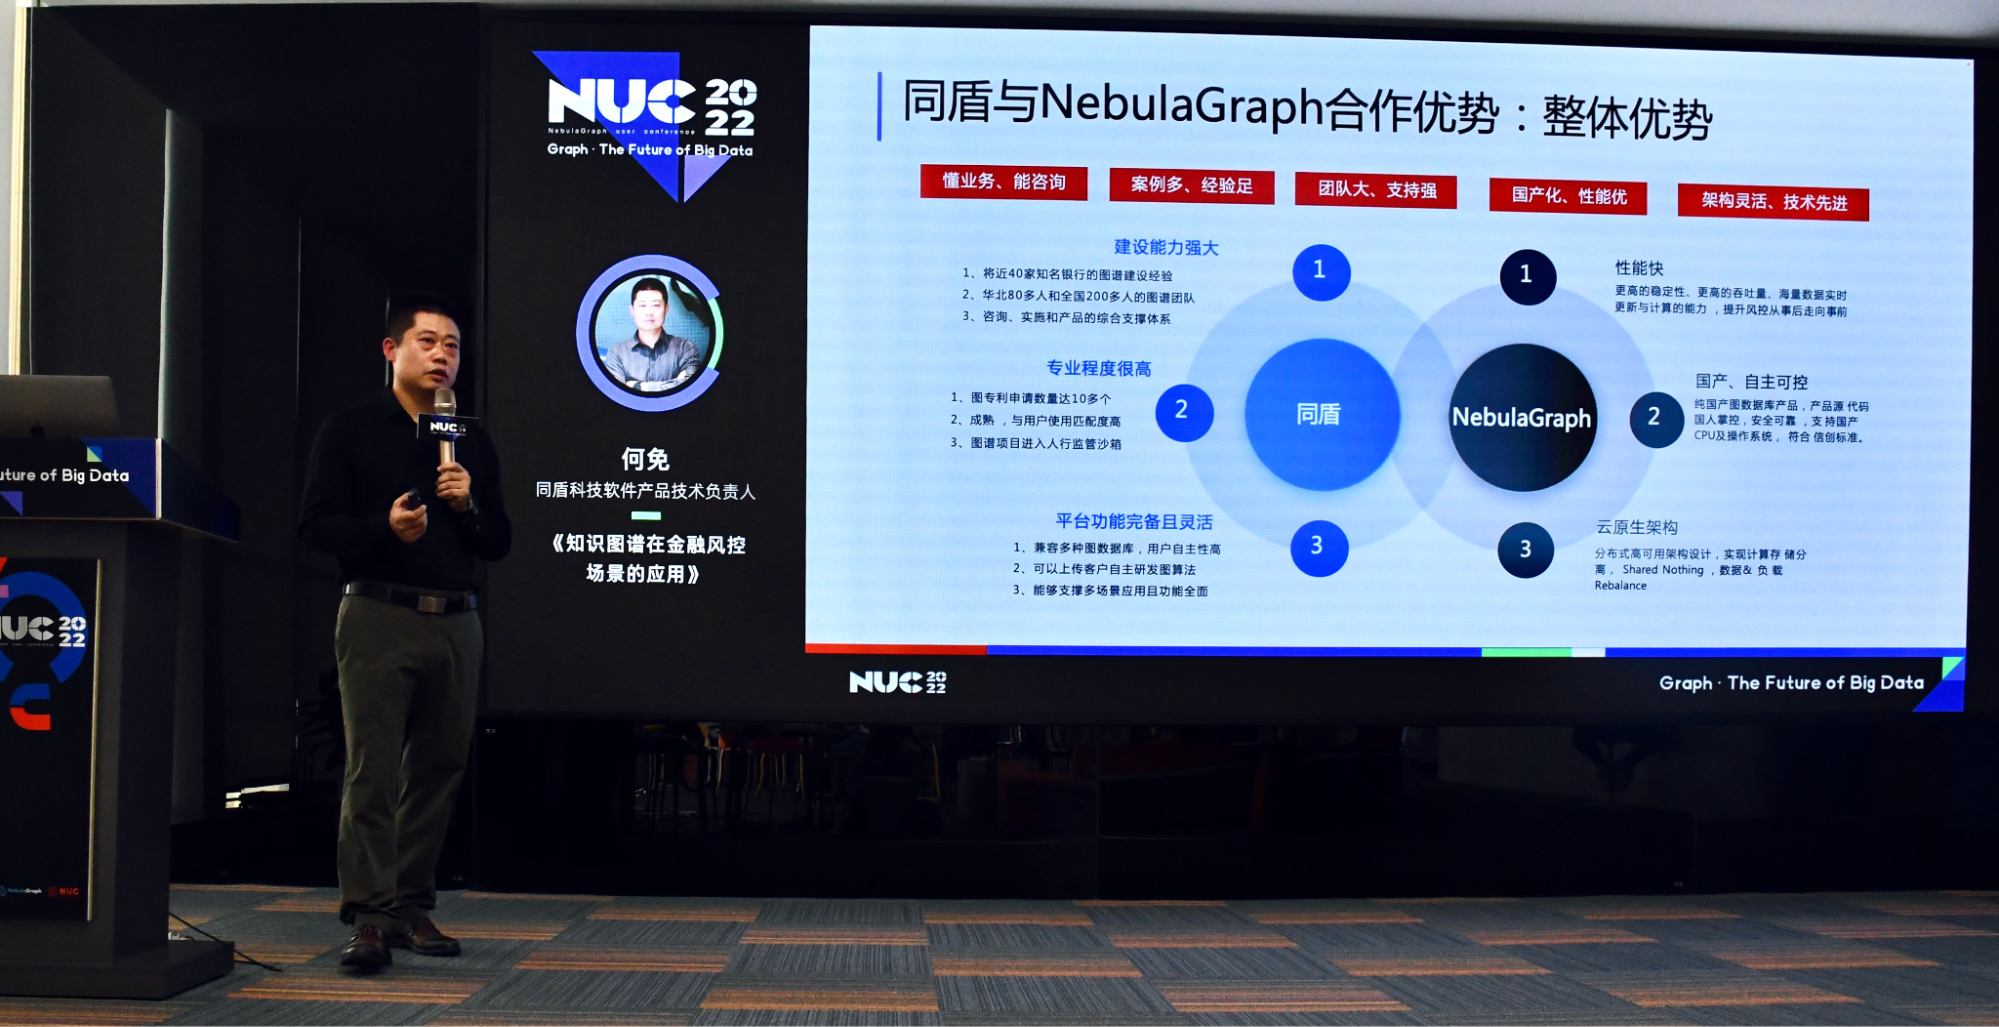  NebulaGraph同路人_同盾科技_知识图谱平台应用